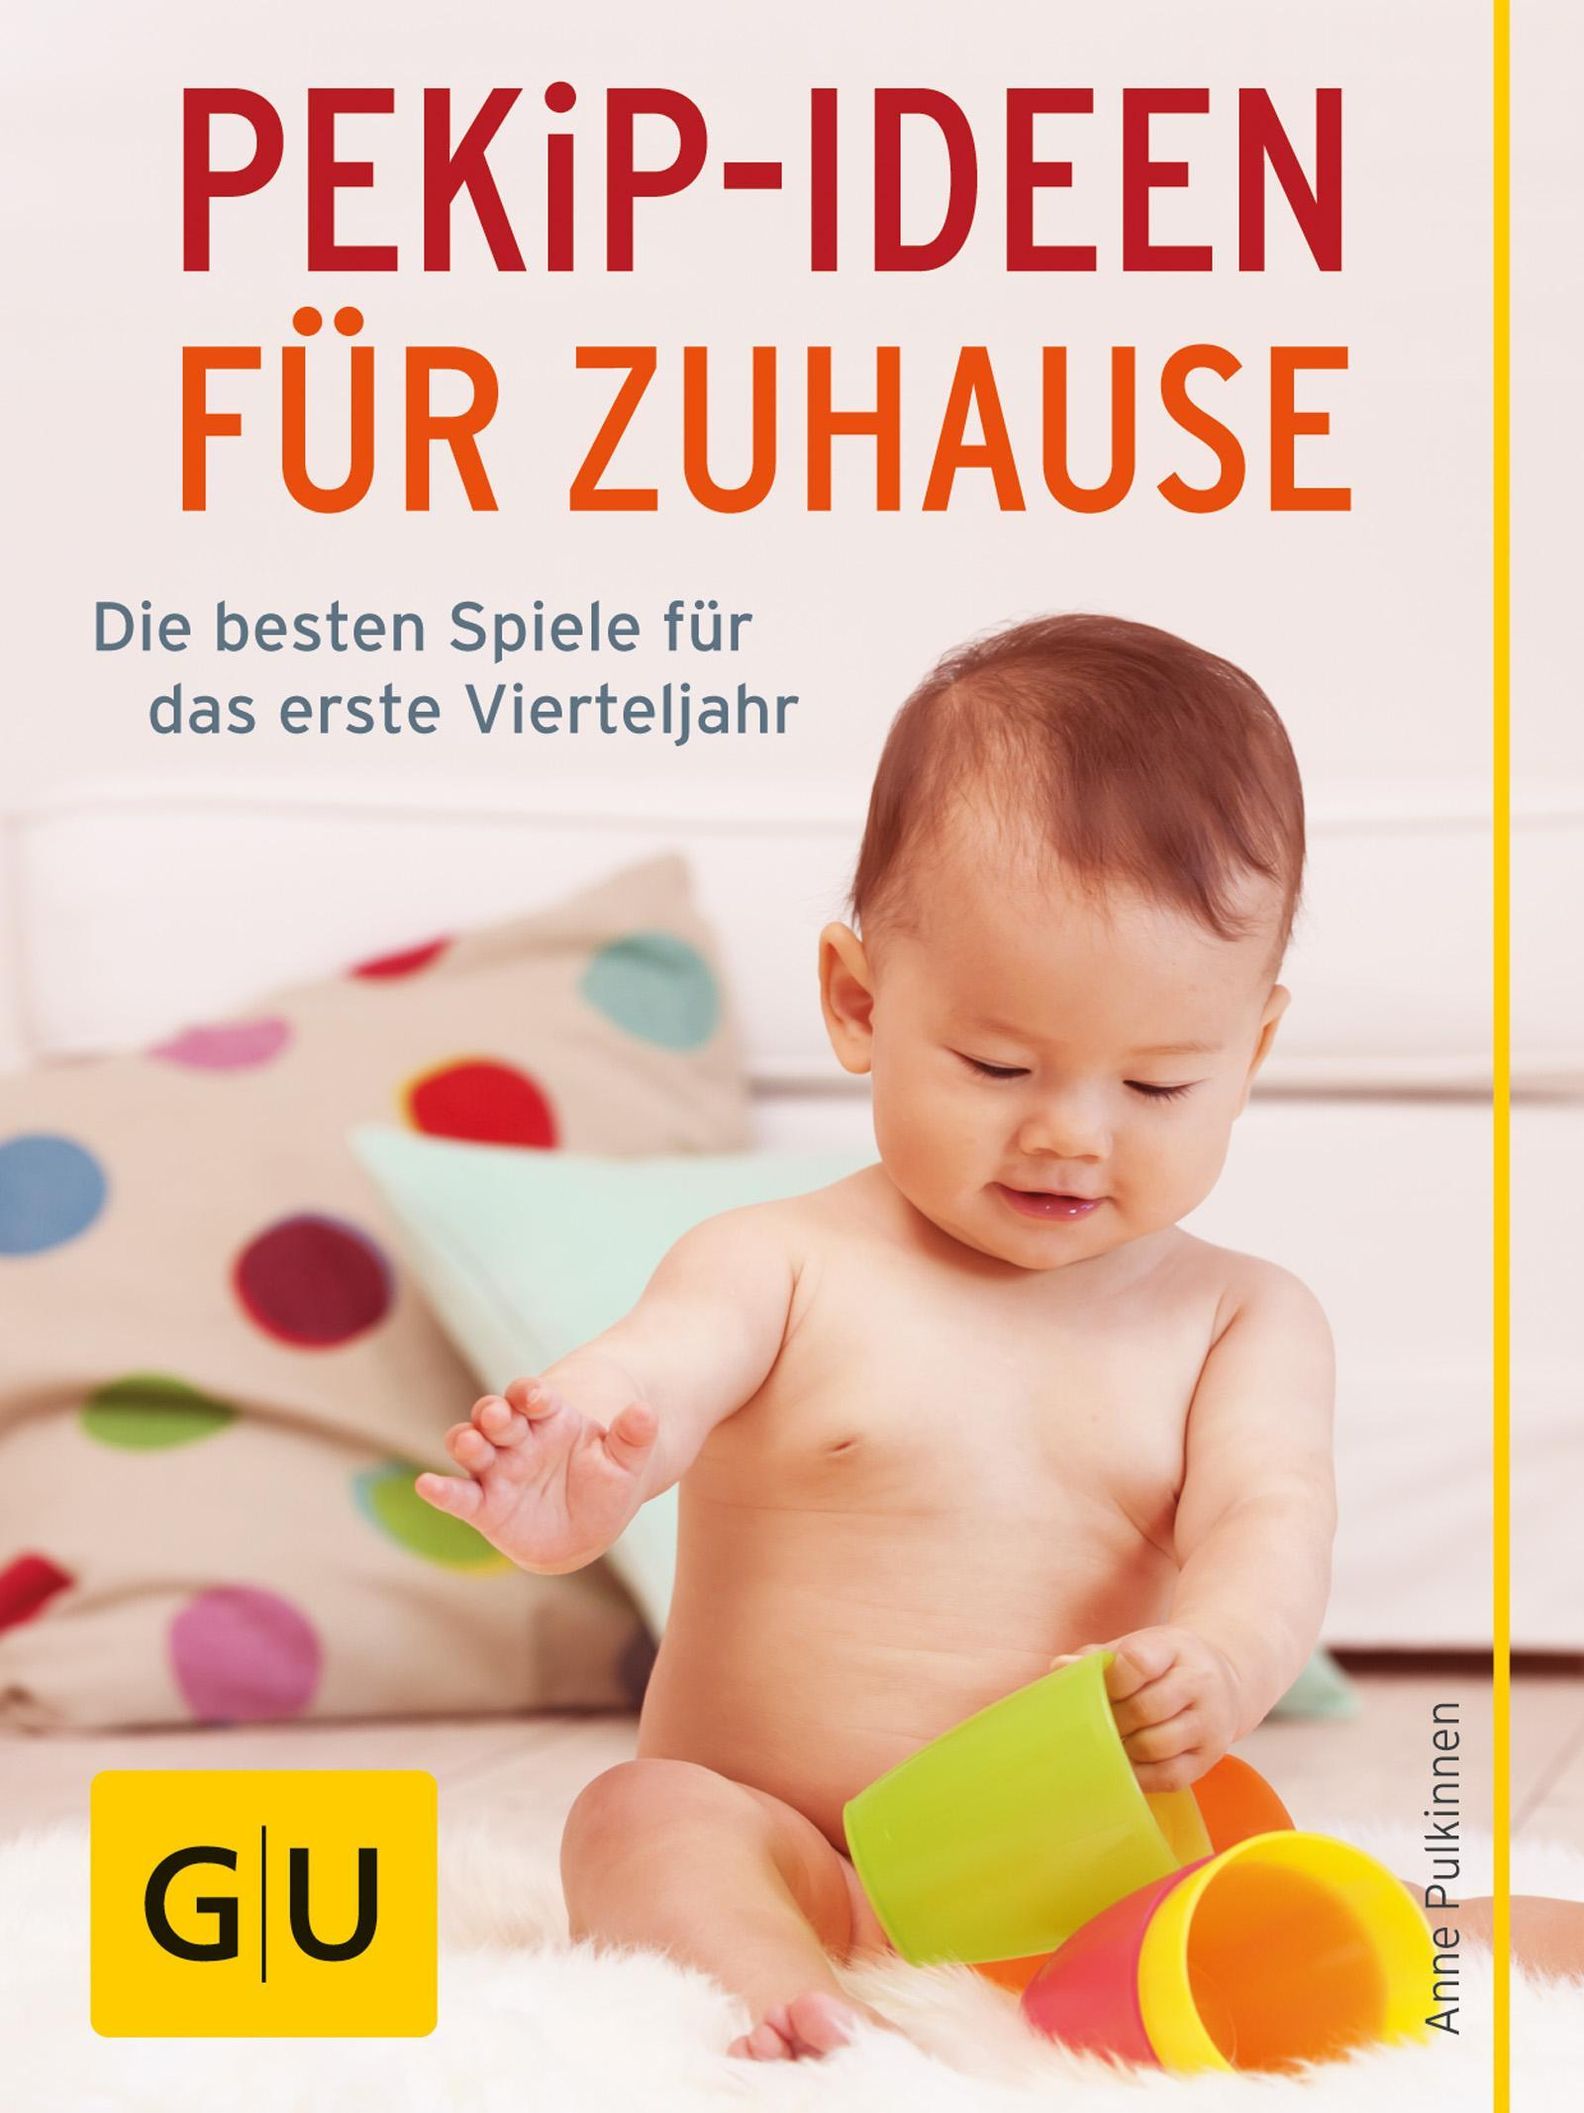 PEKiP - Ideen für Zuhause GU Ratgeber Kinder eBook v. Anne Pulkkinen |  Weltbild